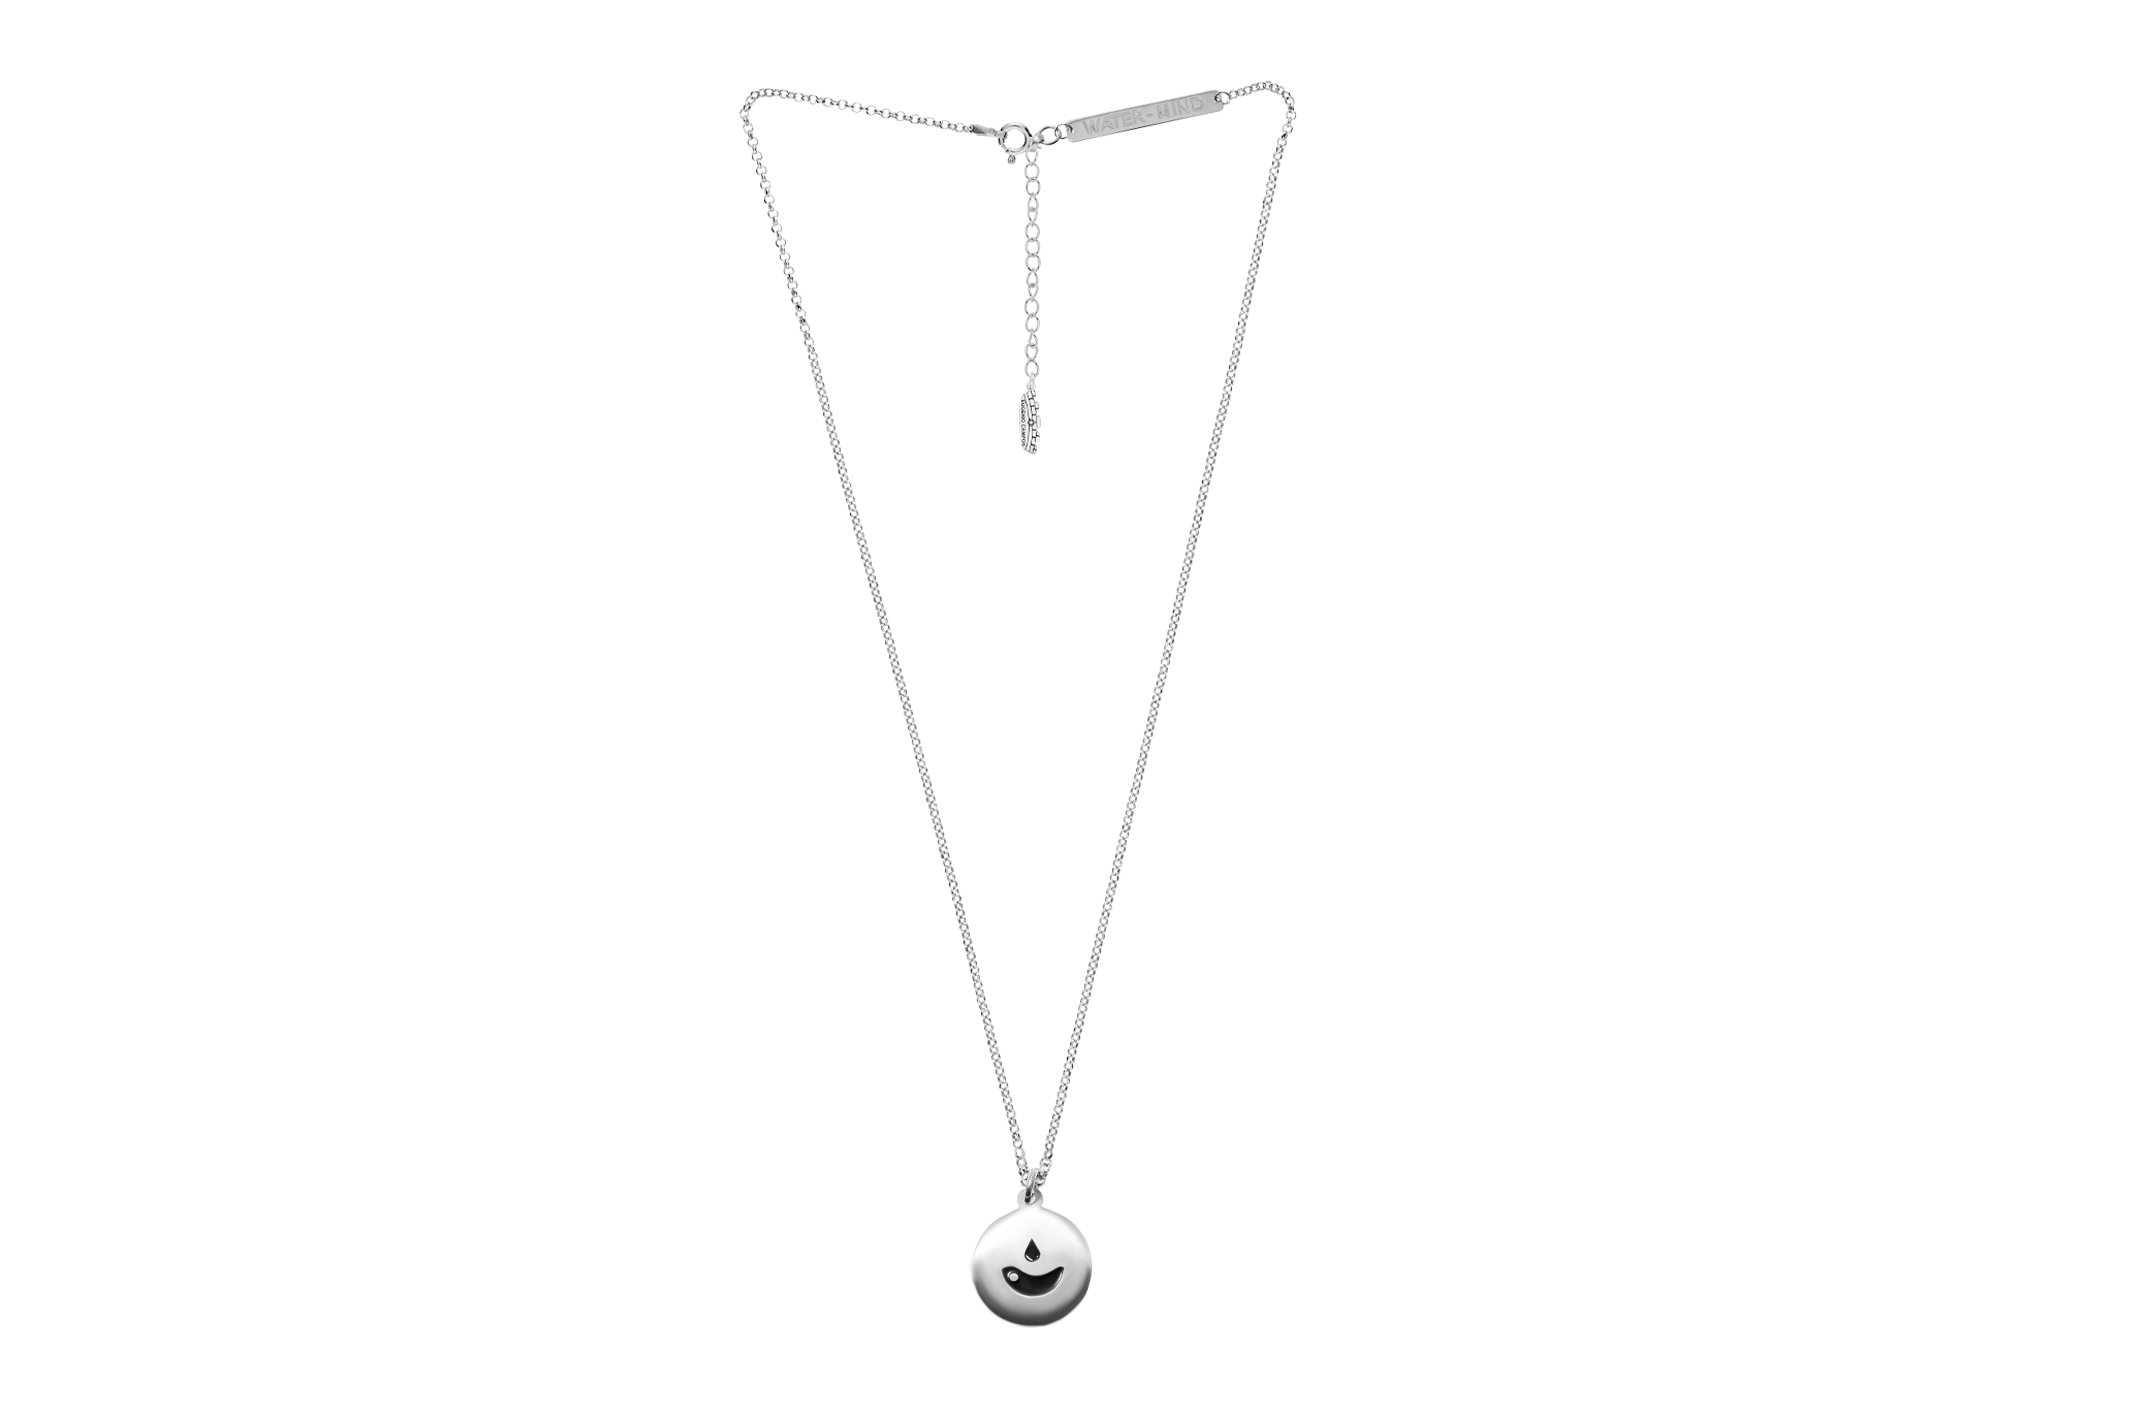 Joia: colar;Material: prata 925;Cor: branco;Medida (Fio): 38 + 6 cm;Medida (Pendente): 1.2 cm;Género: mulher